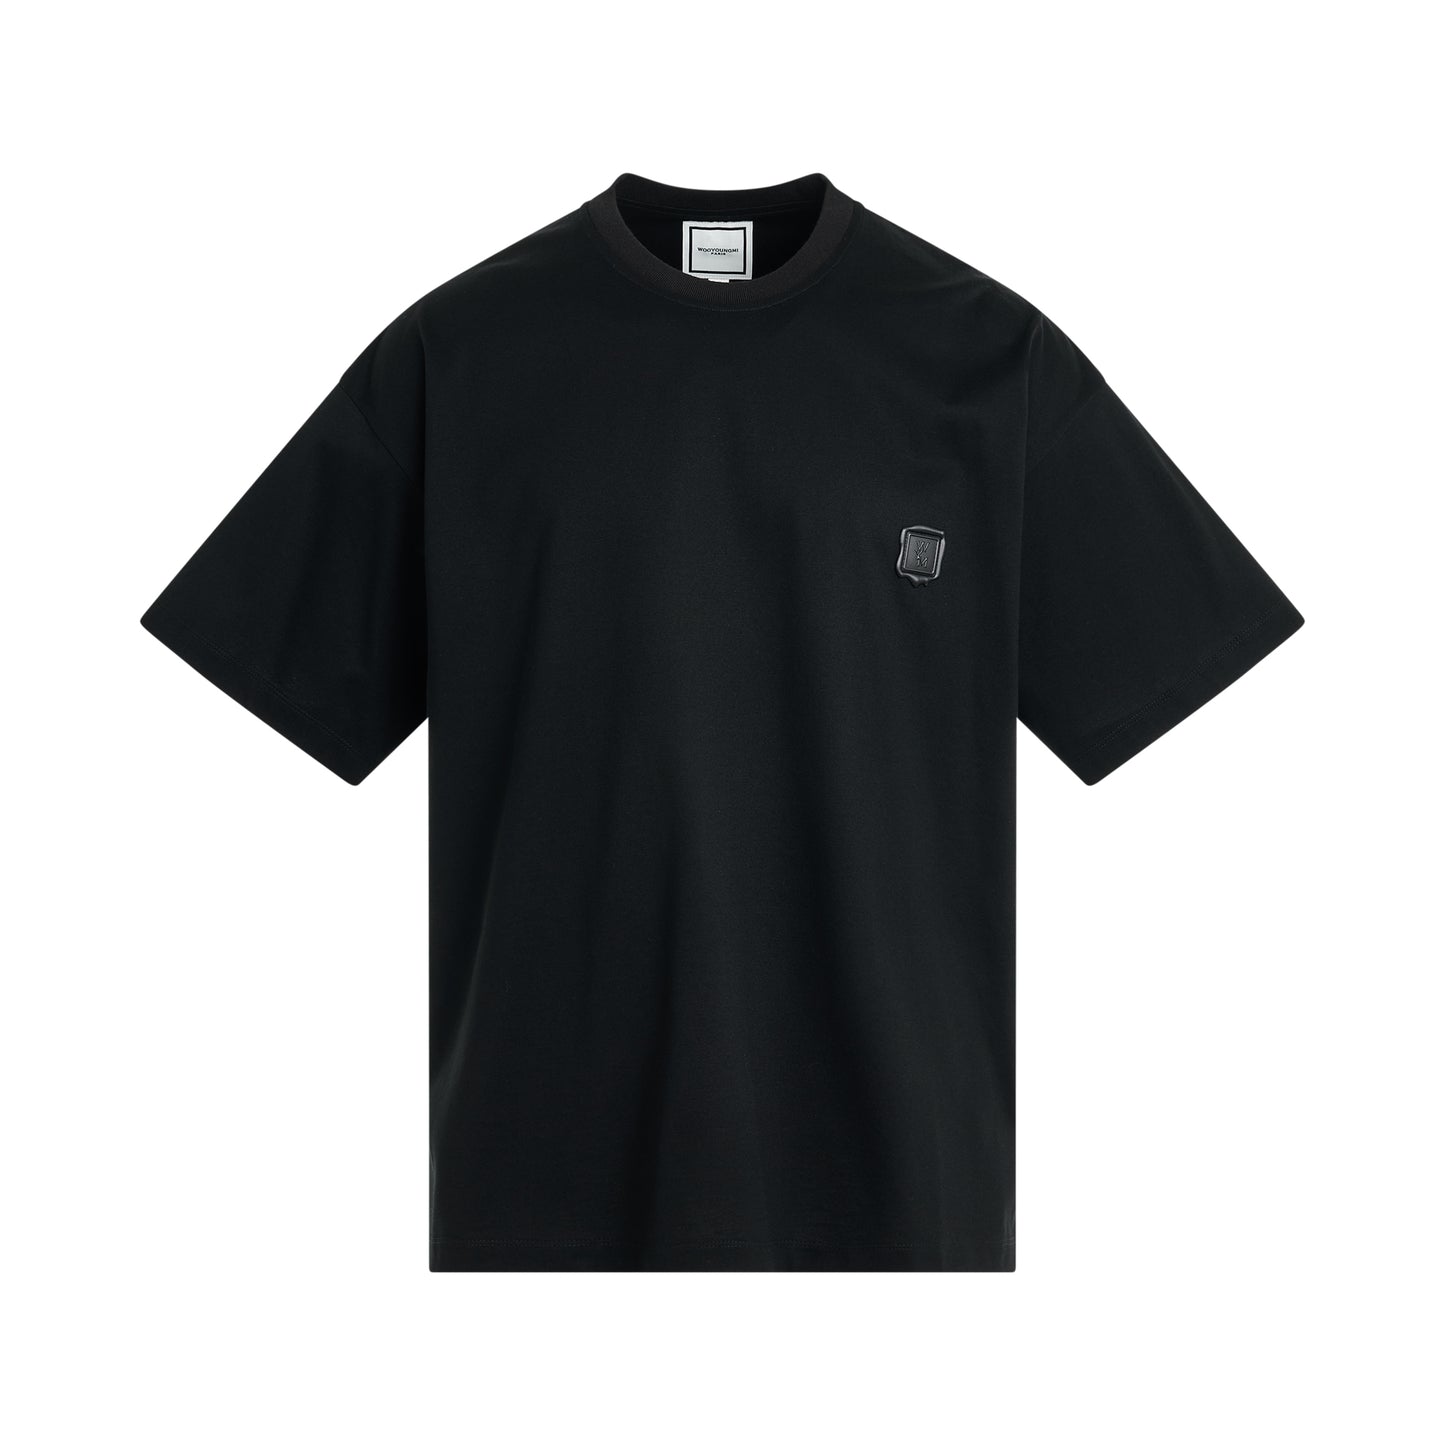 Scenery Print T-Shirt in Black